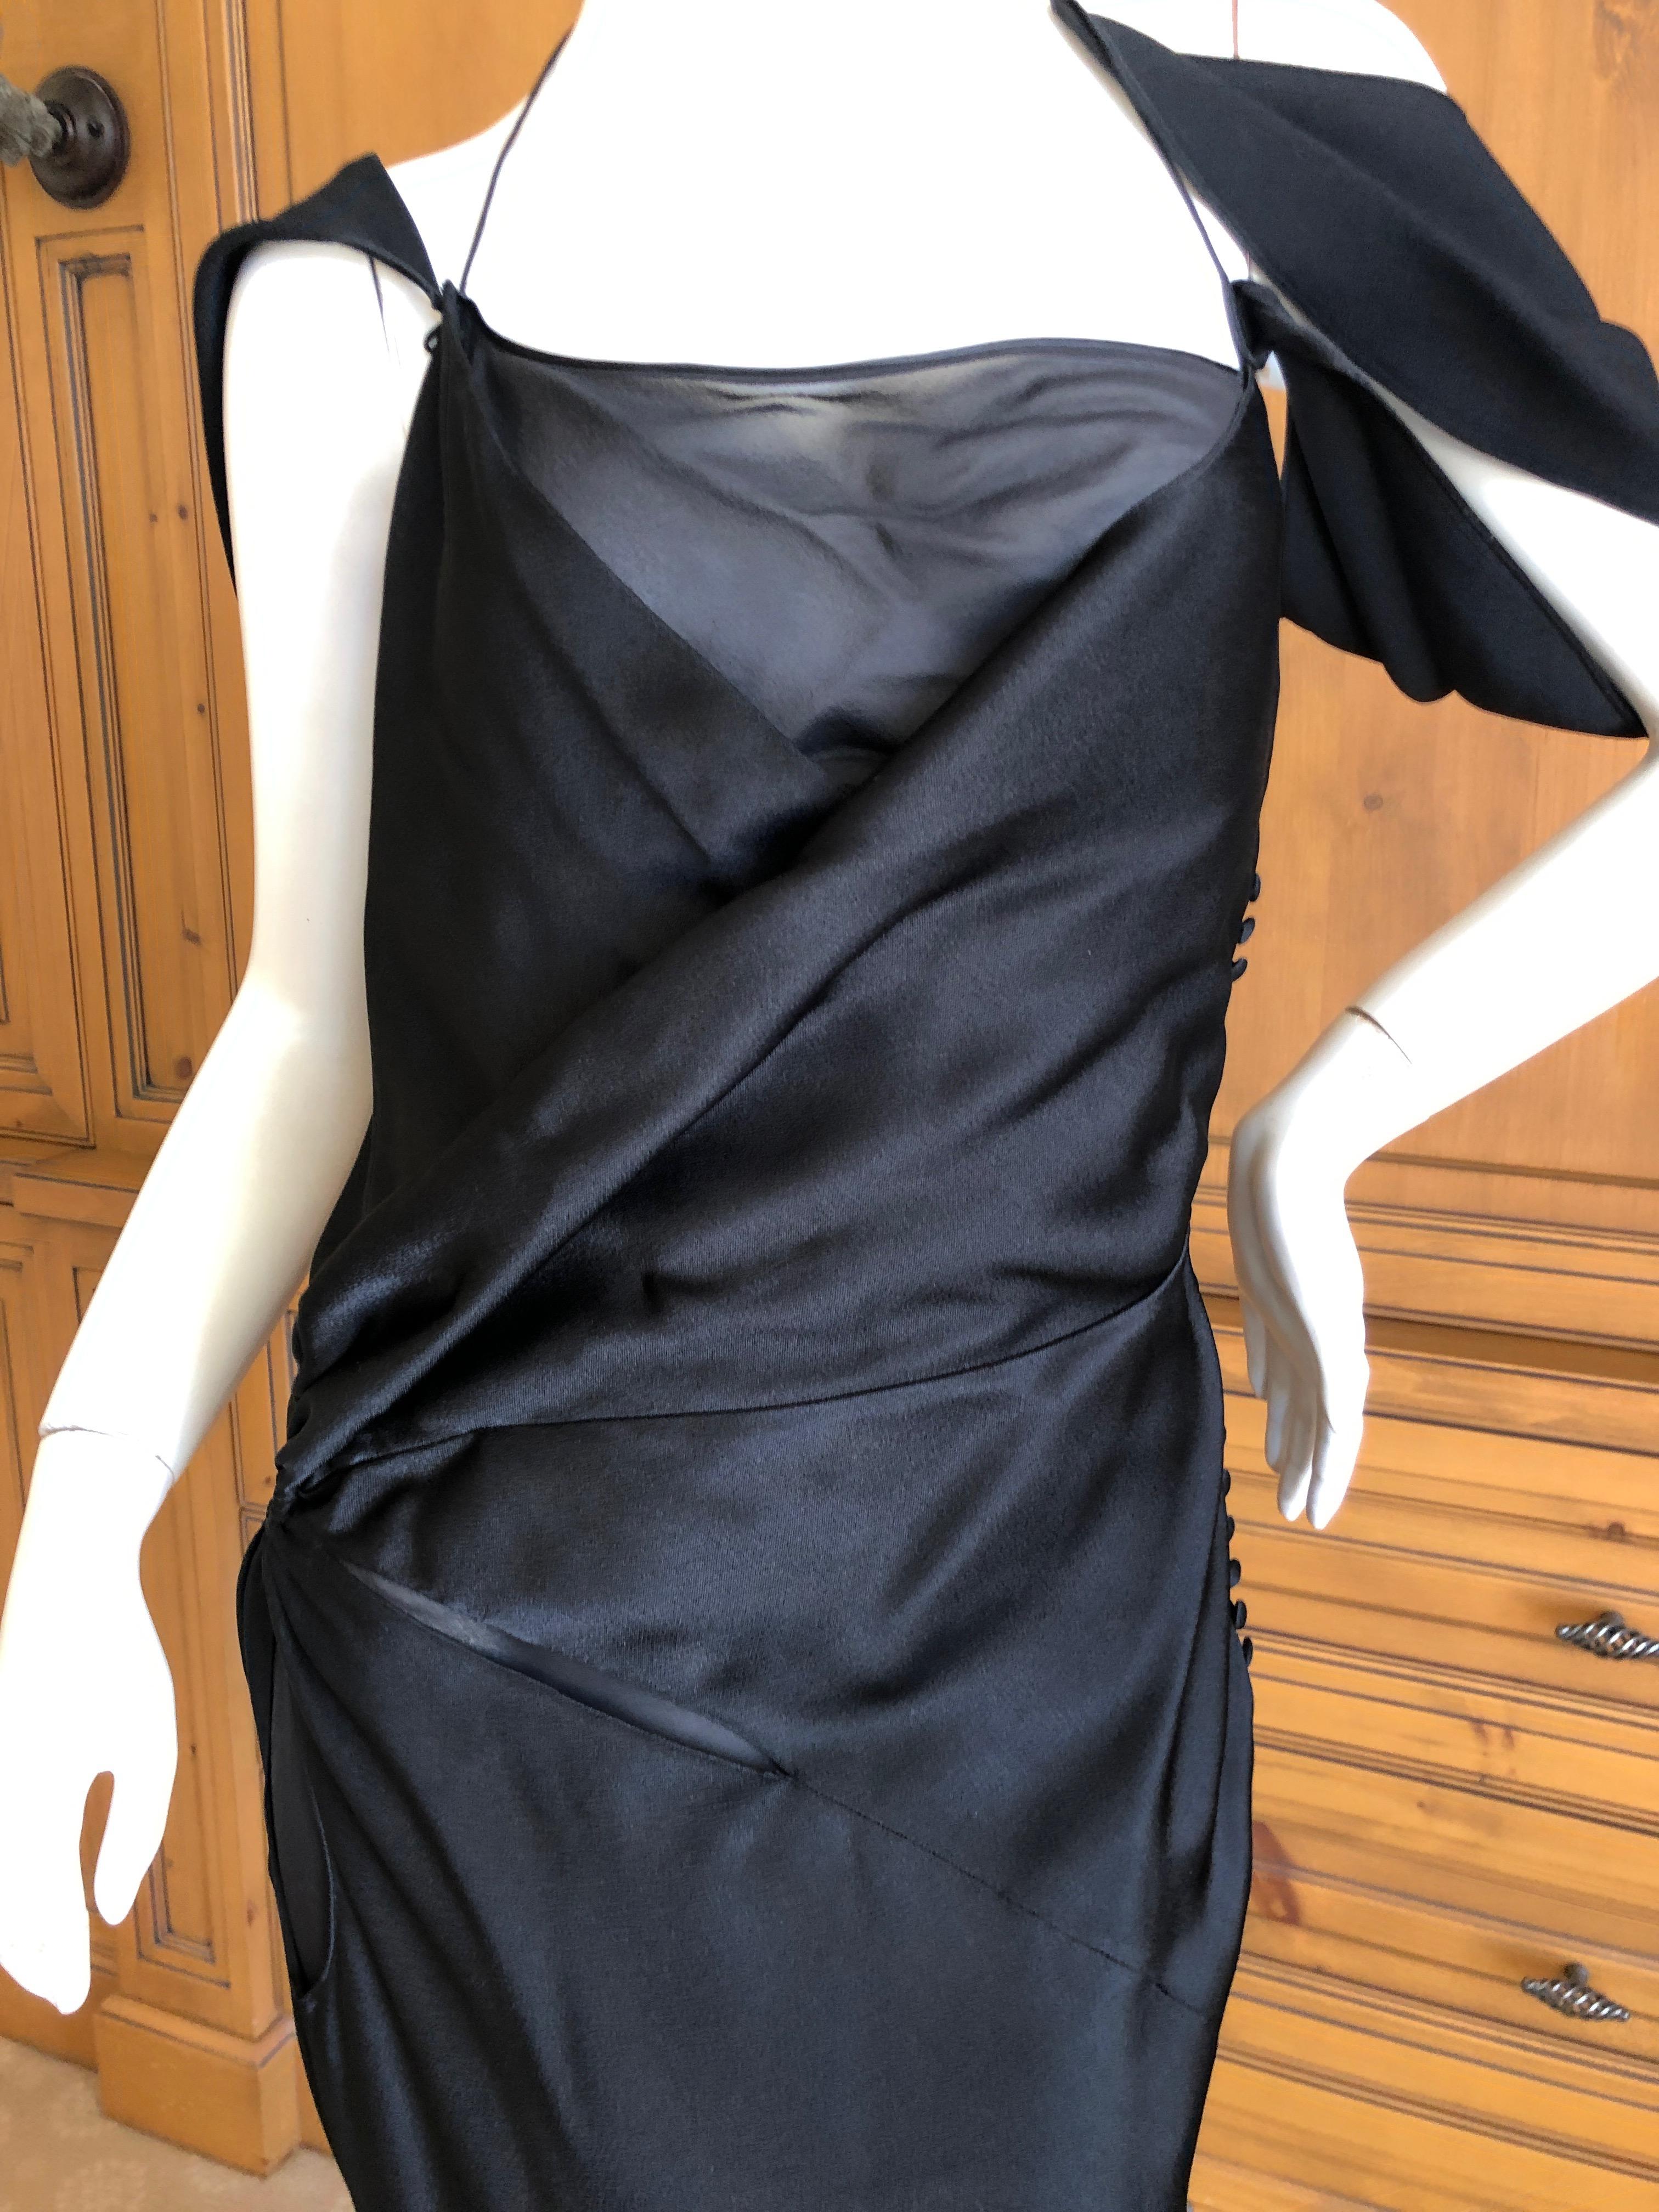 Women's John Galliano Spring 2000 Black Bias Cut Evening Dress with Sheer Inserts Sz 42 For Sale